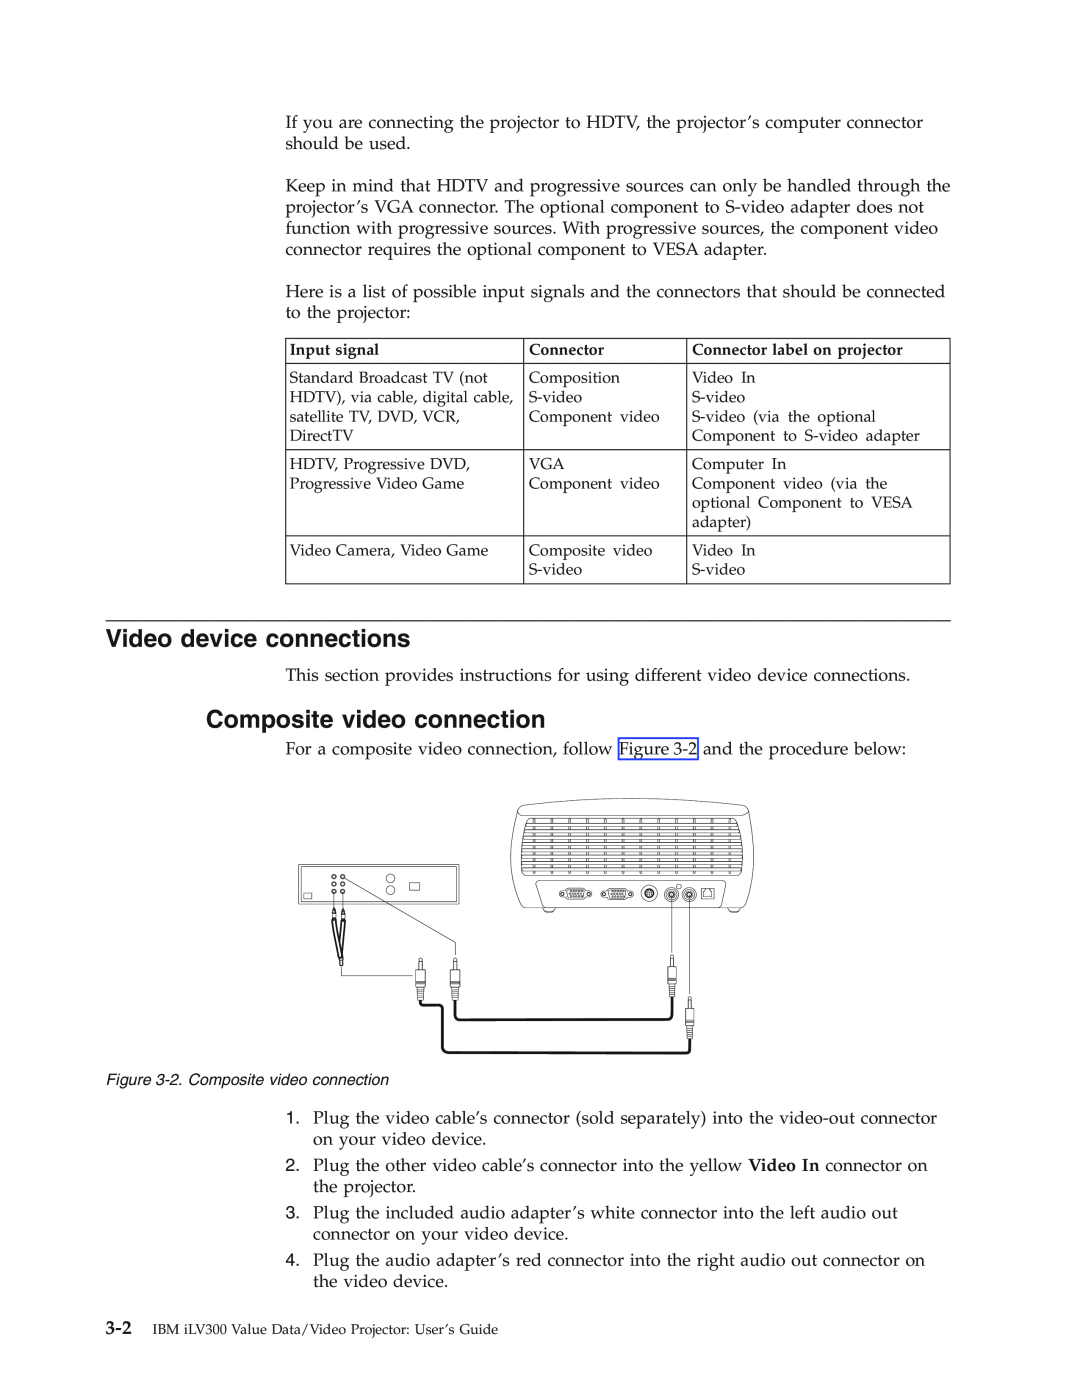 IBM Partner Pavilion iLV300 manual Video device connections, Composite video connection, Input signal, Connector 